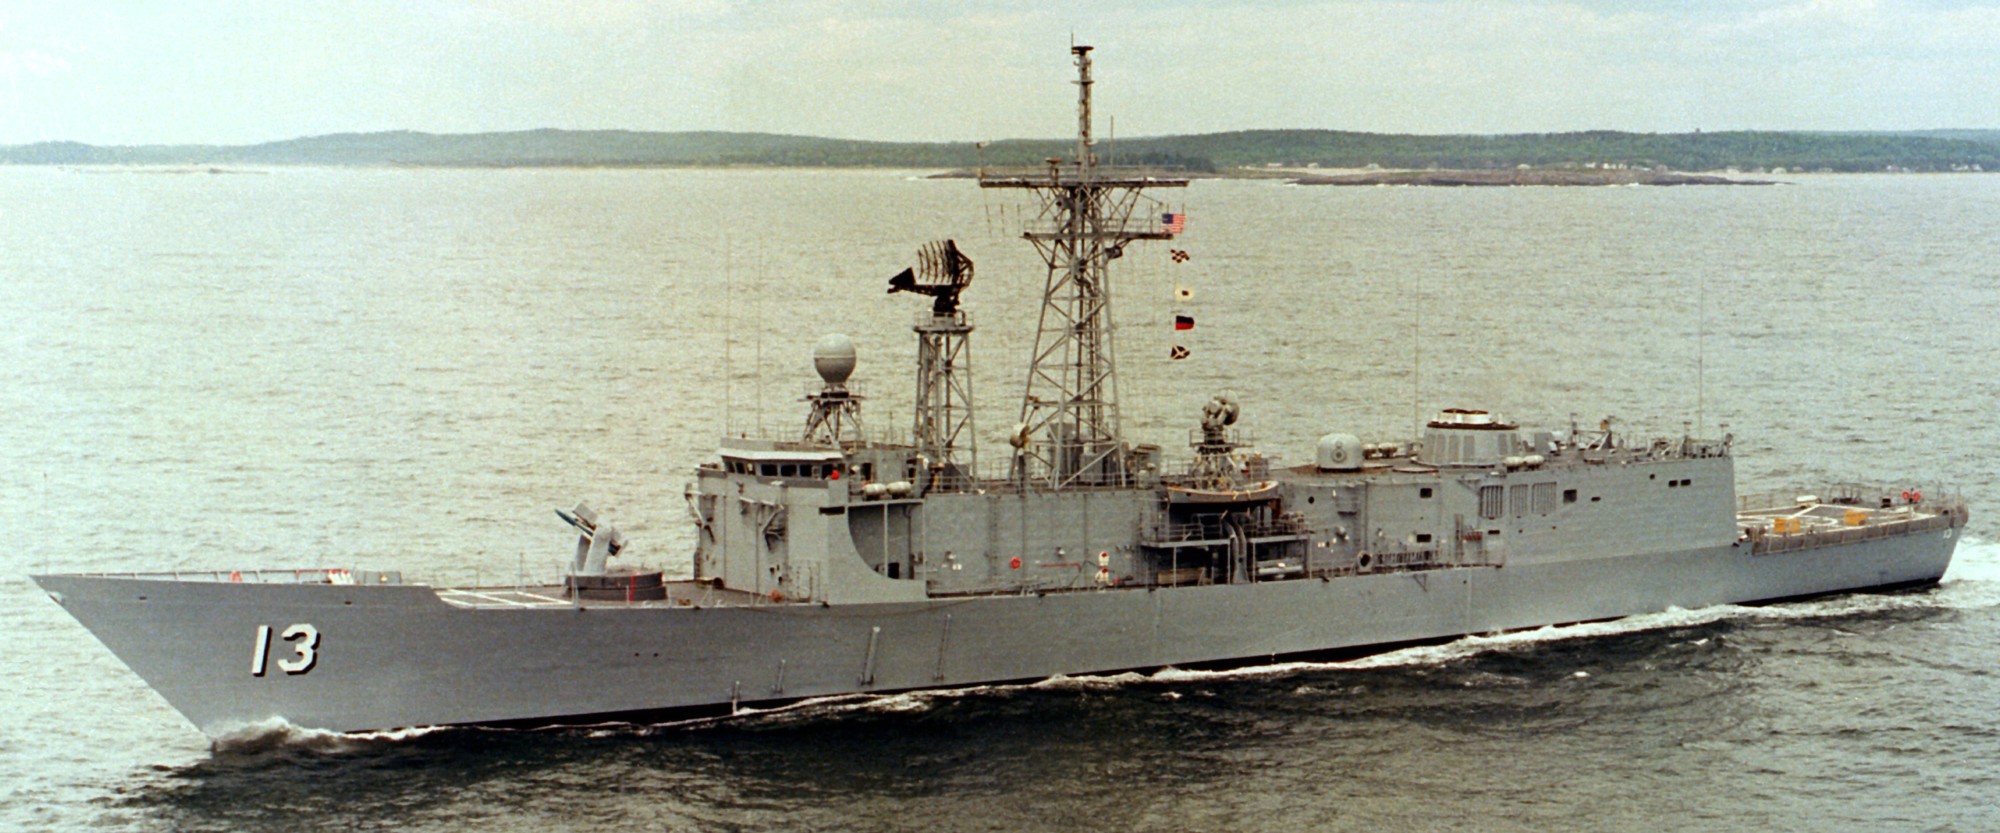 ffg-13 uss samuel eliot morison oh perry class frigate gabya f-496 tcg gokova turkish navy 02